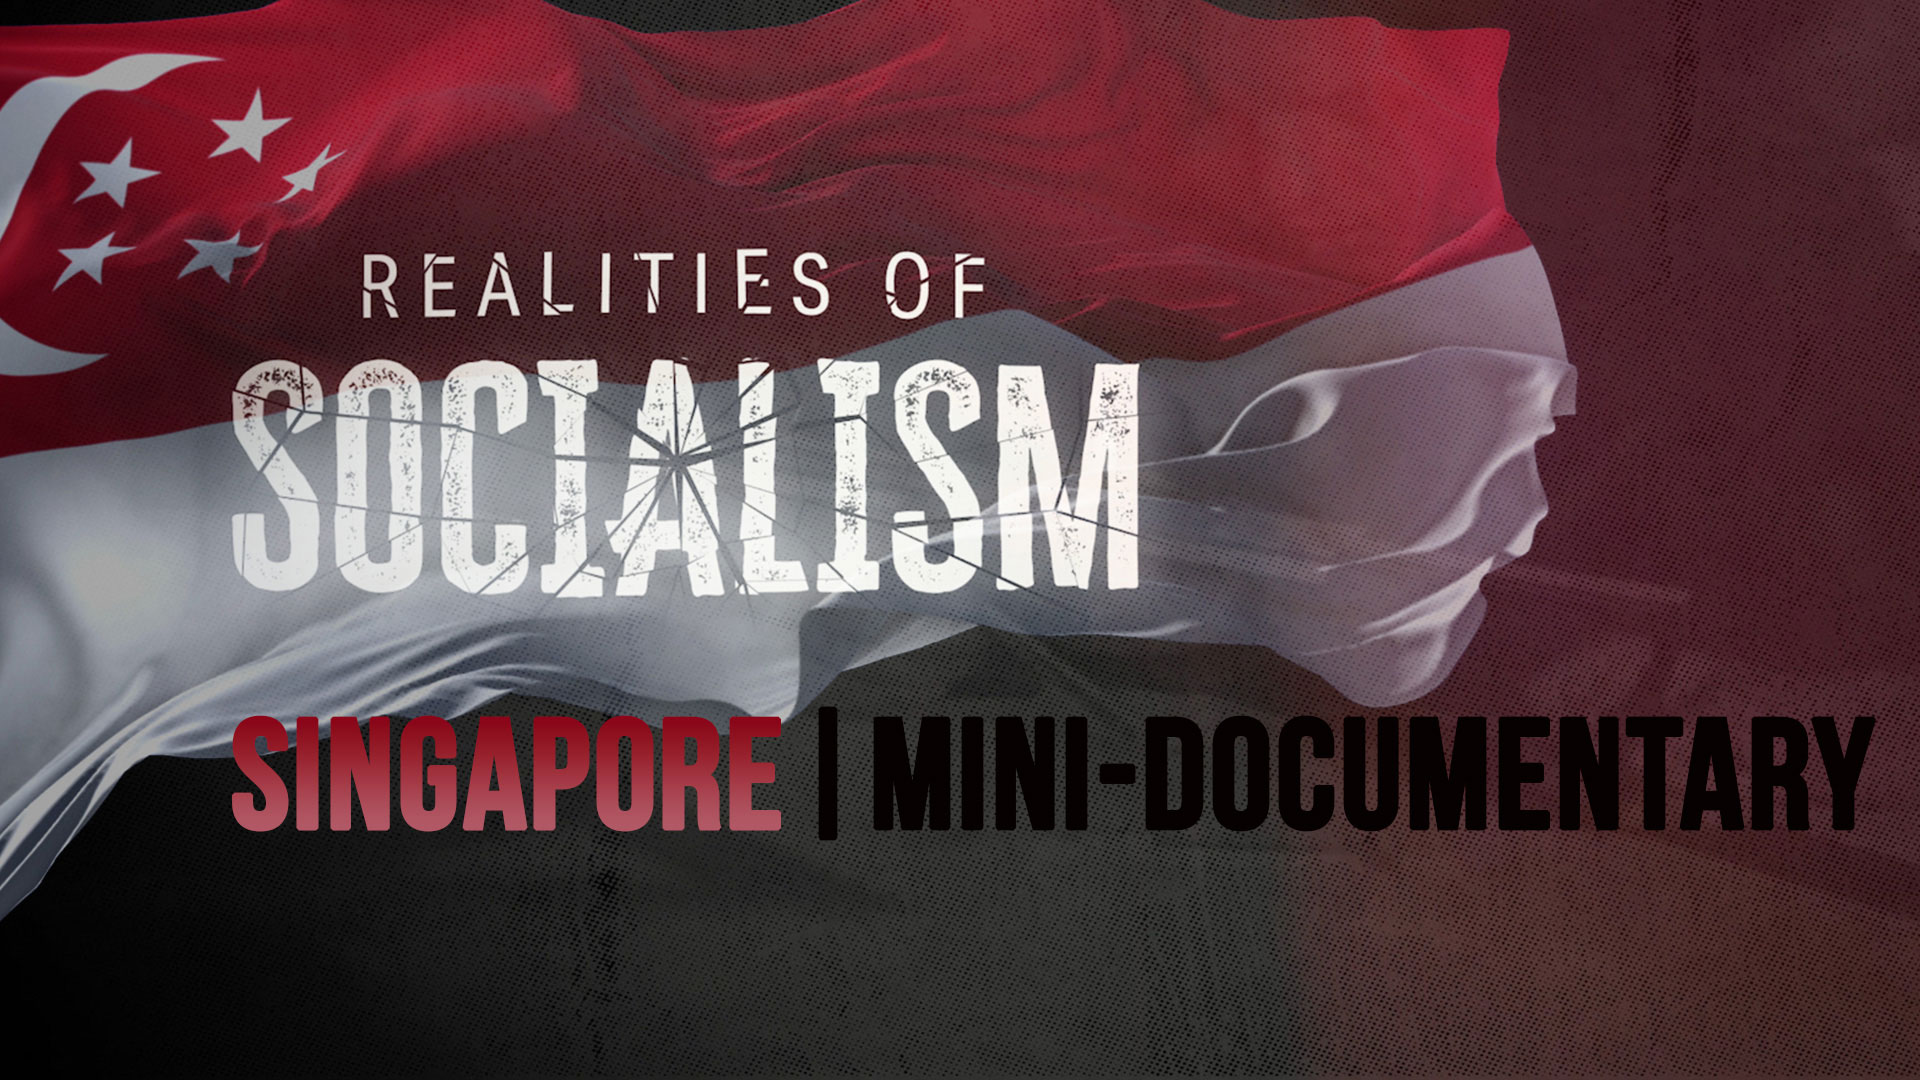 Singapore Mini-documentary